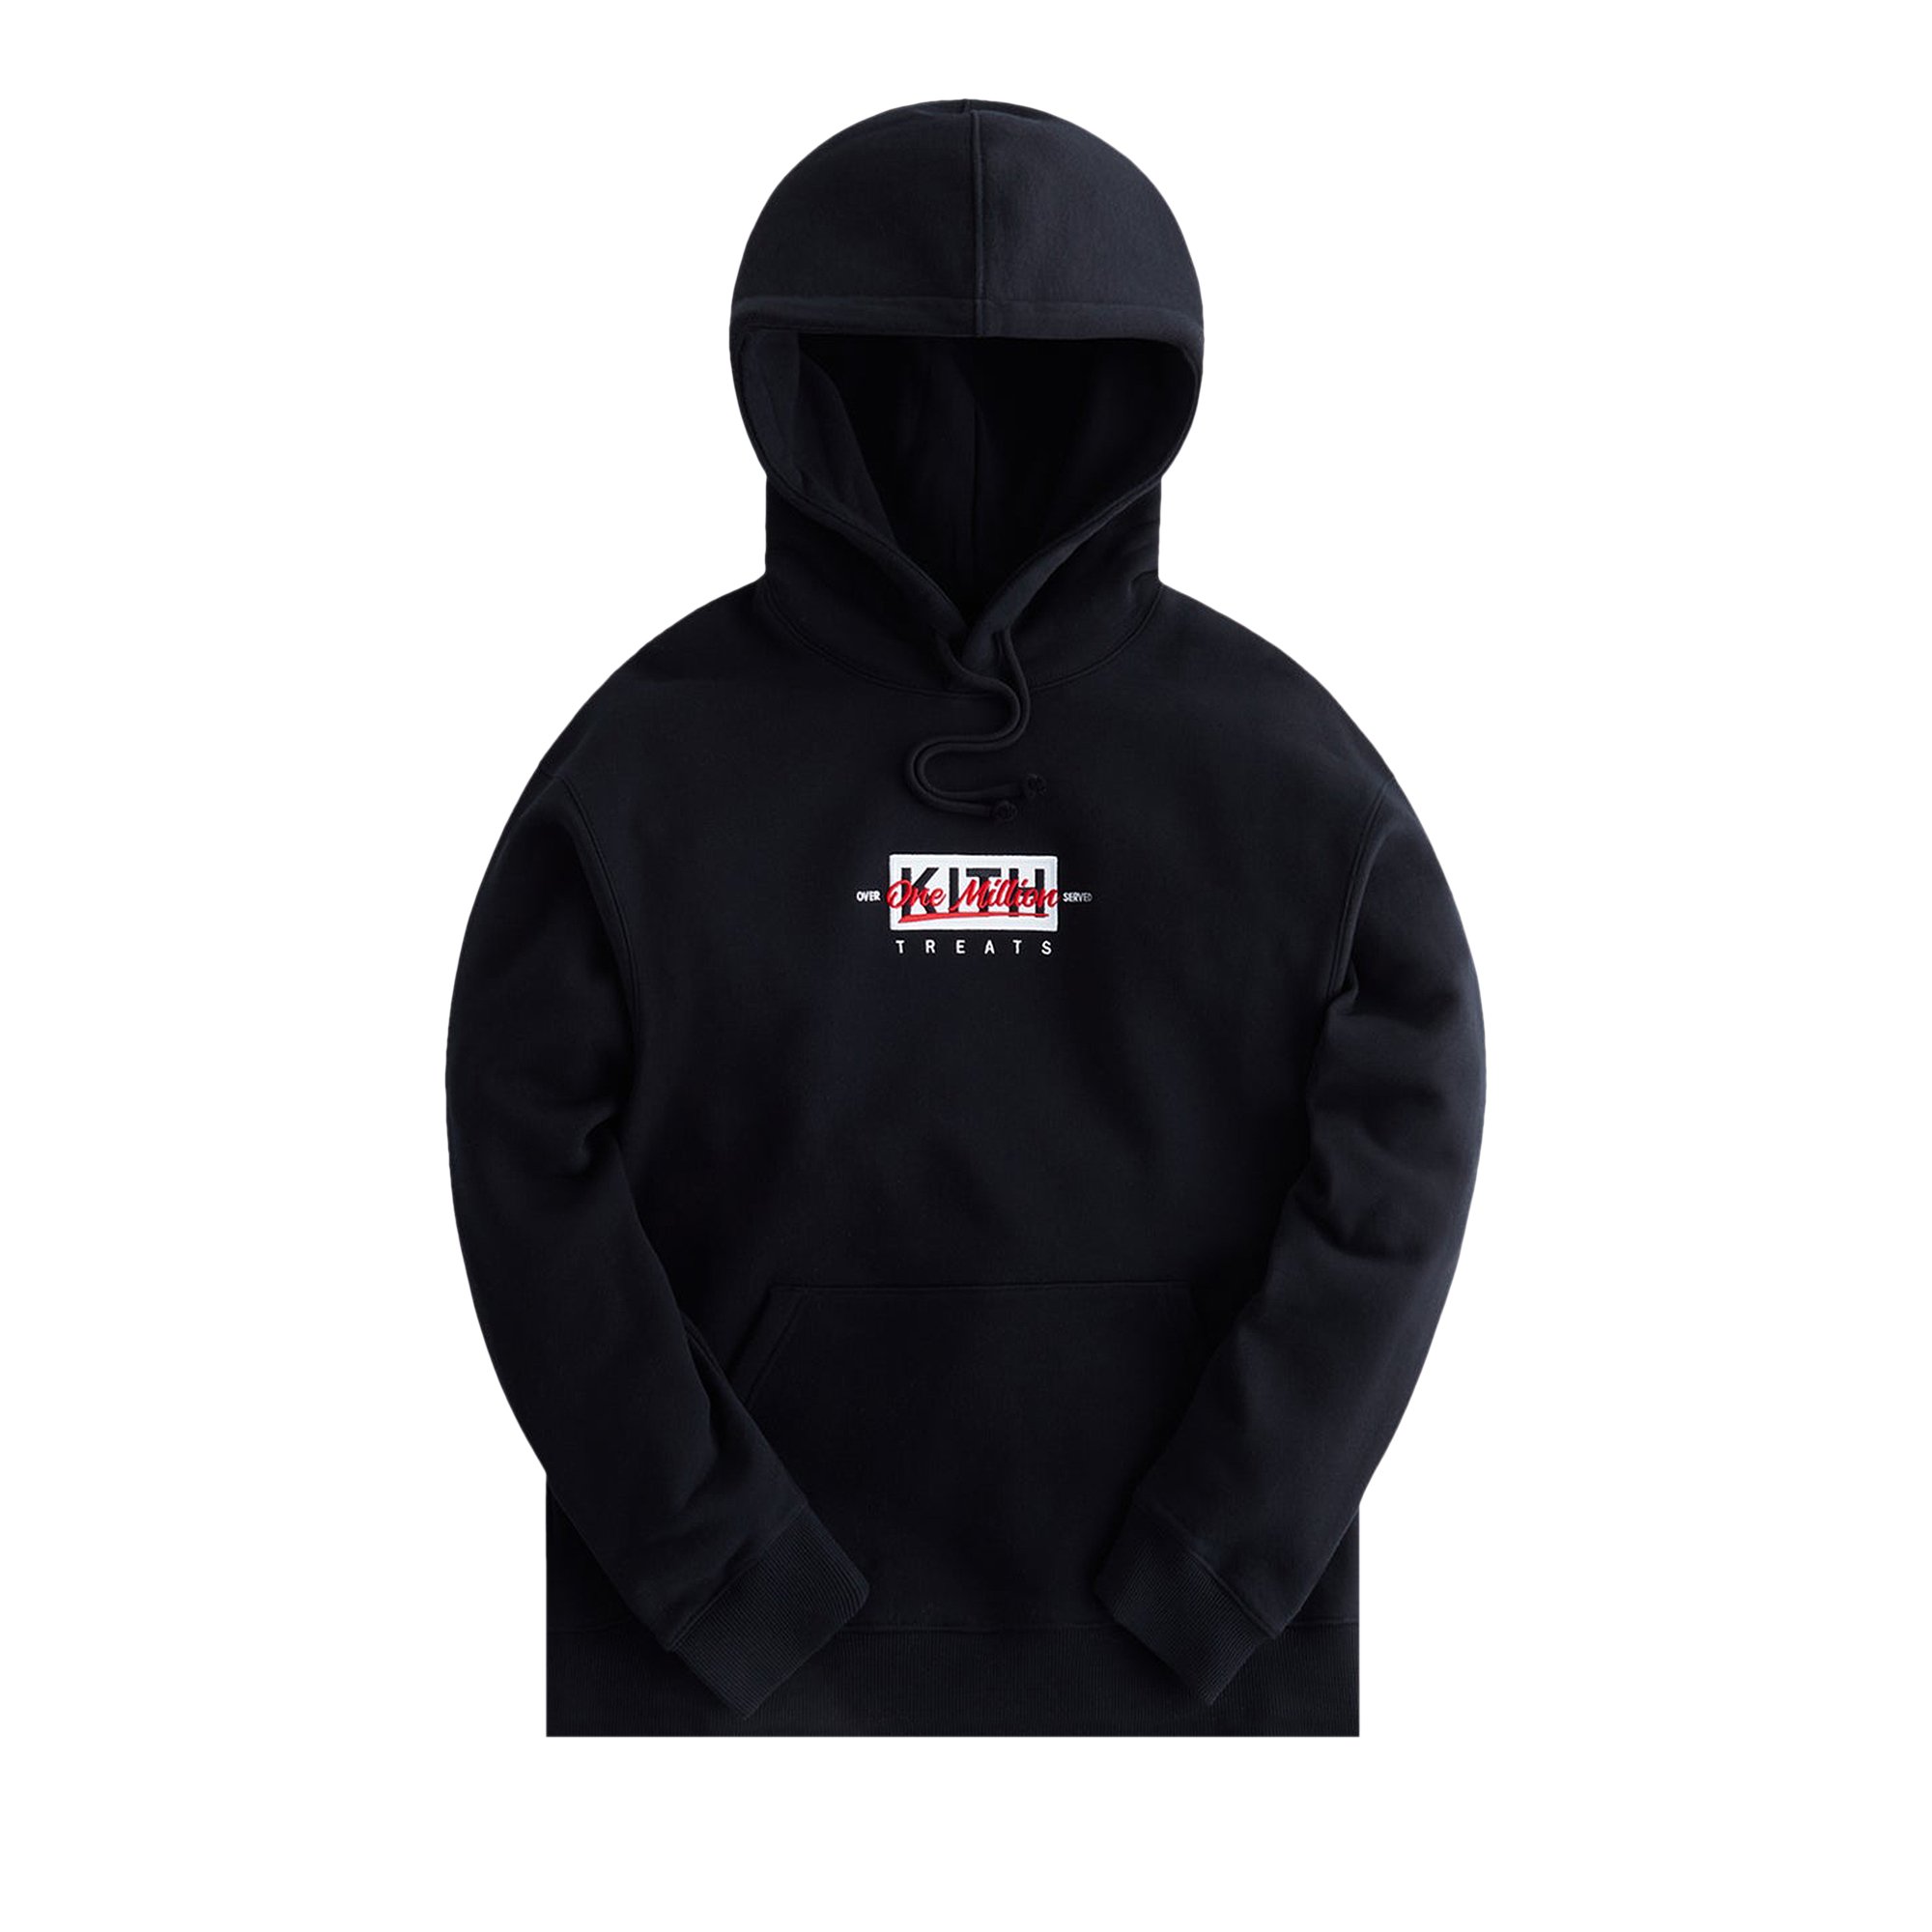 Buy Kith Treats Million Hoodie 'Black' - KHT030071 001 | GOAT